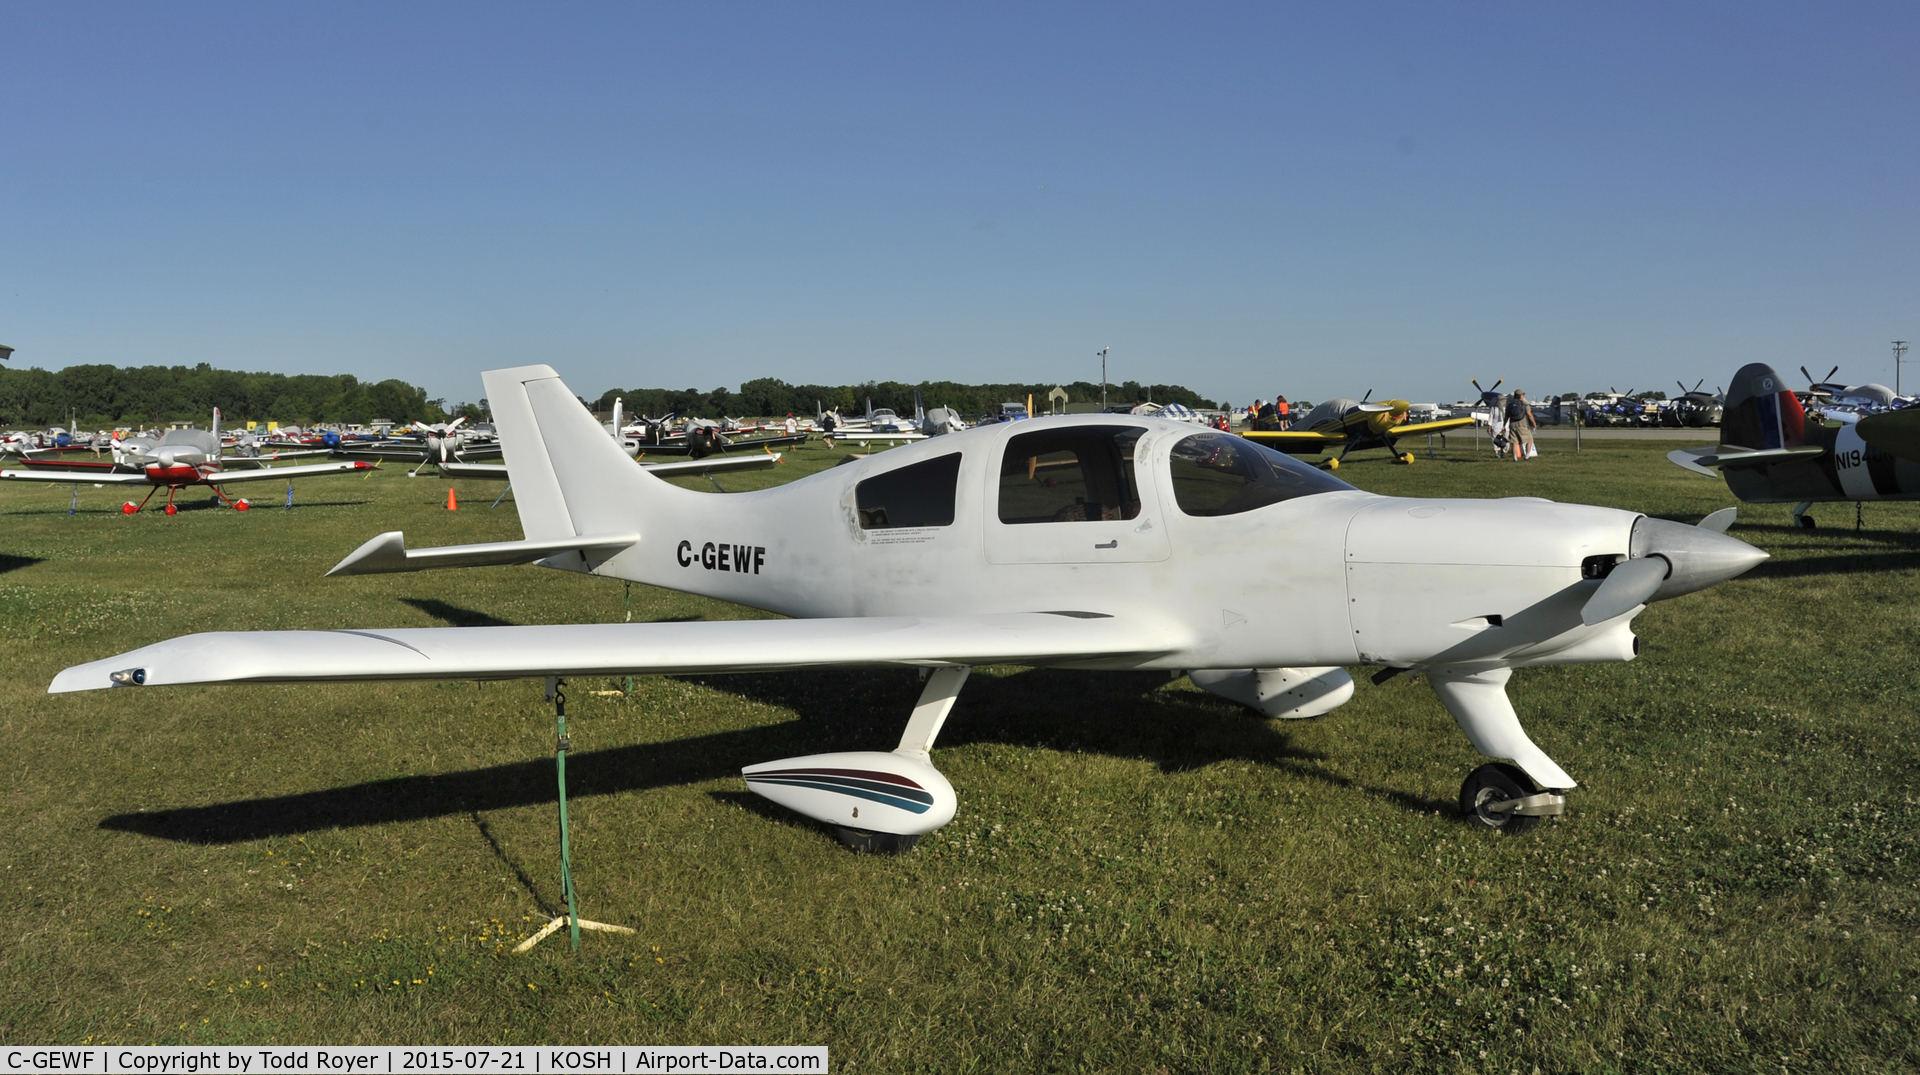 C-GEWF, 1996 Wheeler Express S-90 C/N 025, Airventure 2015